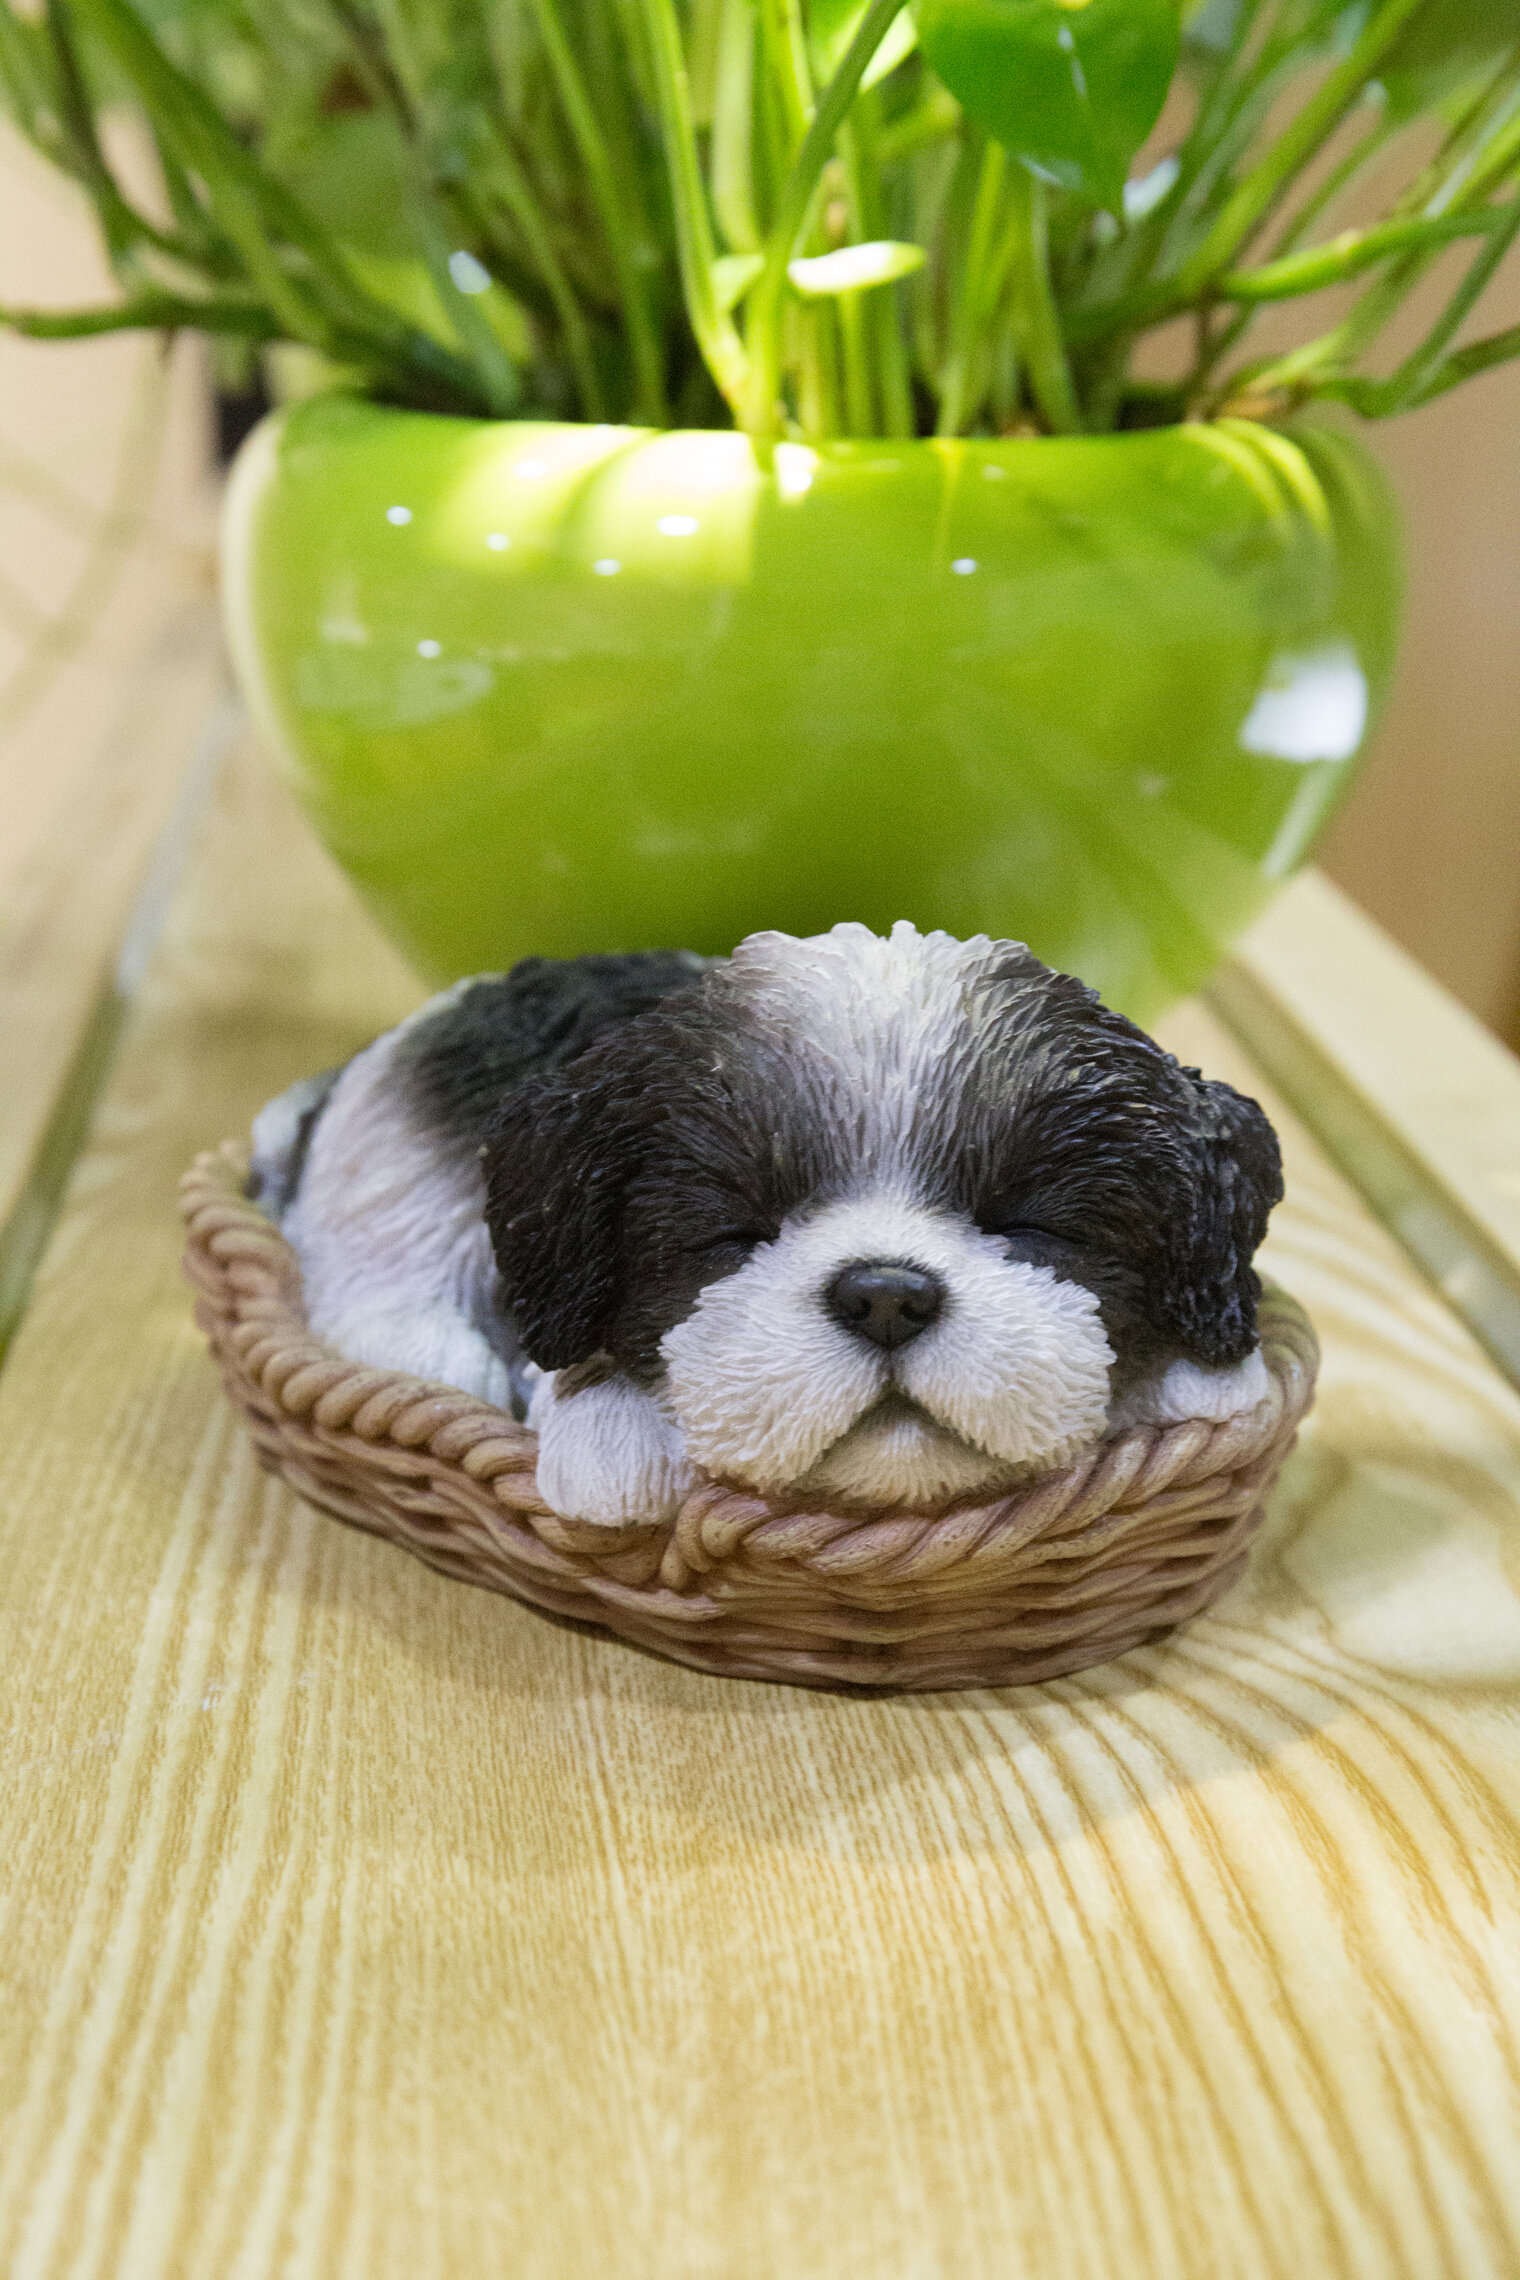  Hi- Line Gift 87710-L Pug Puppy Sleeping Pet Pals